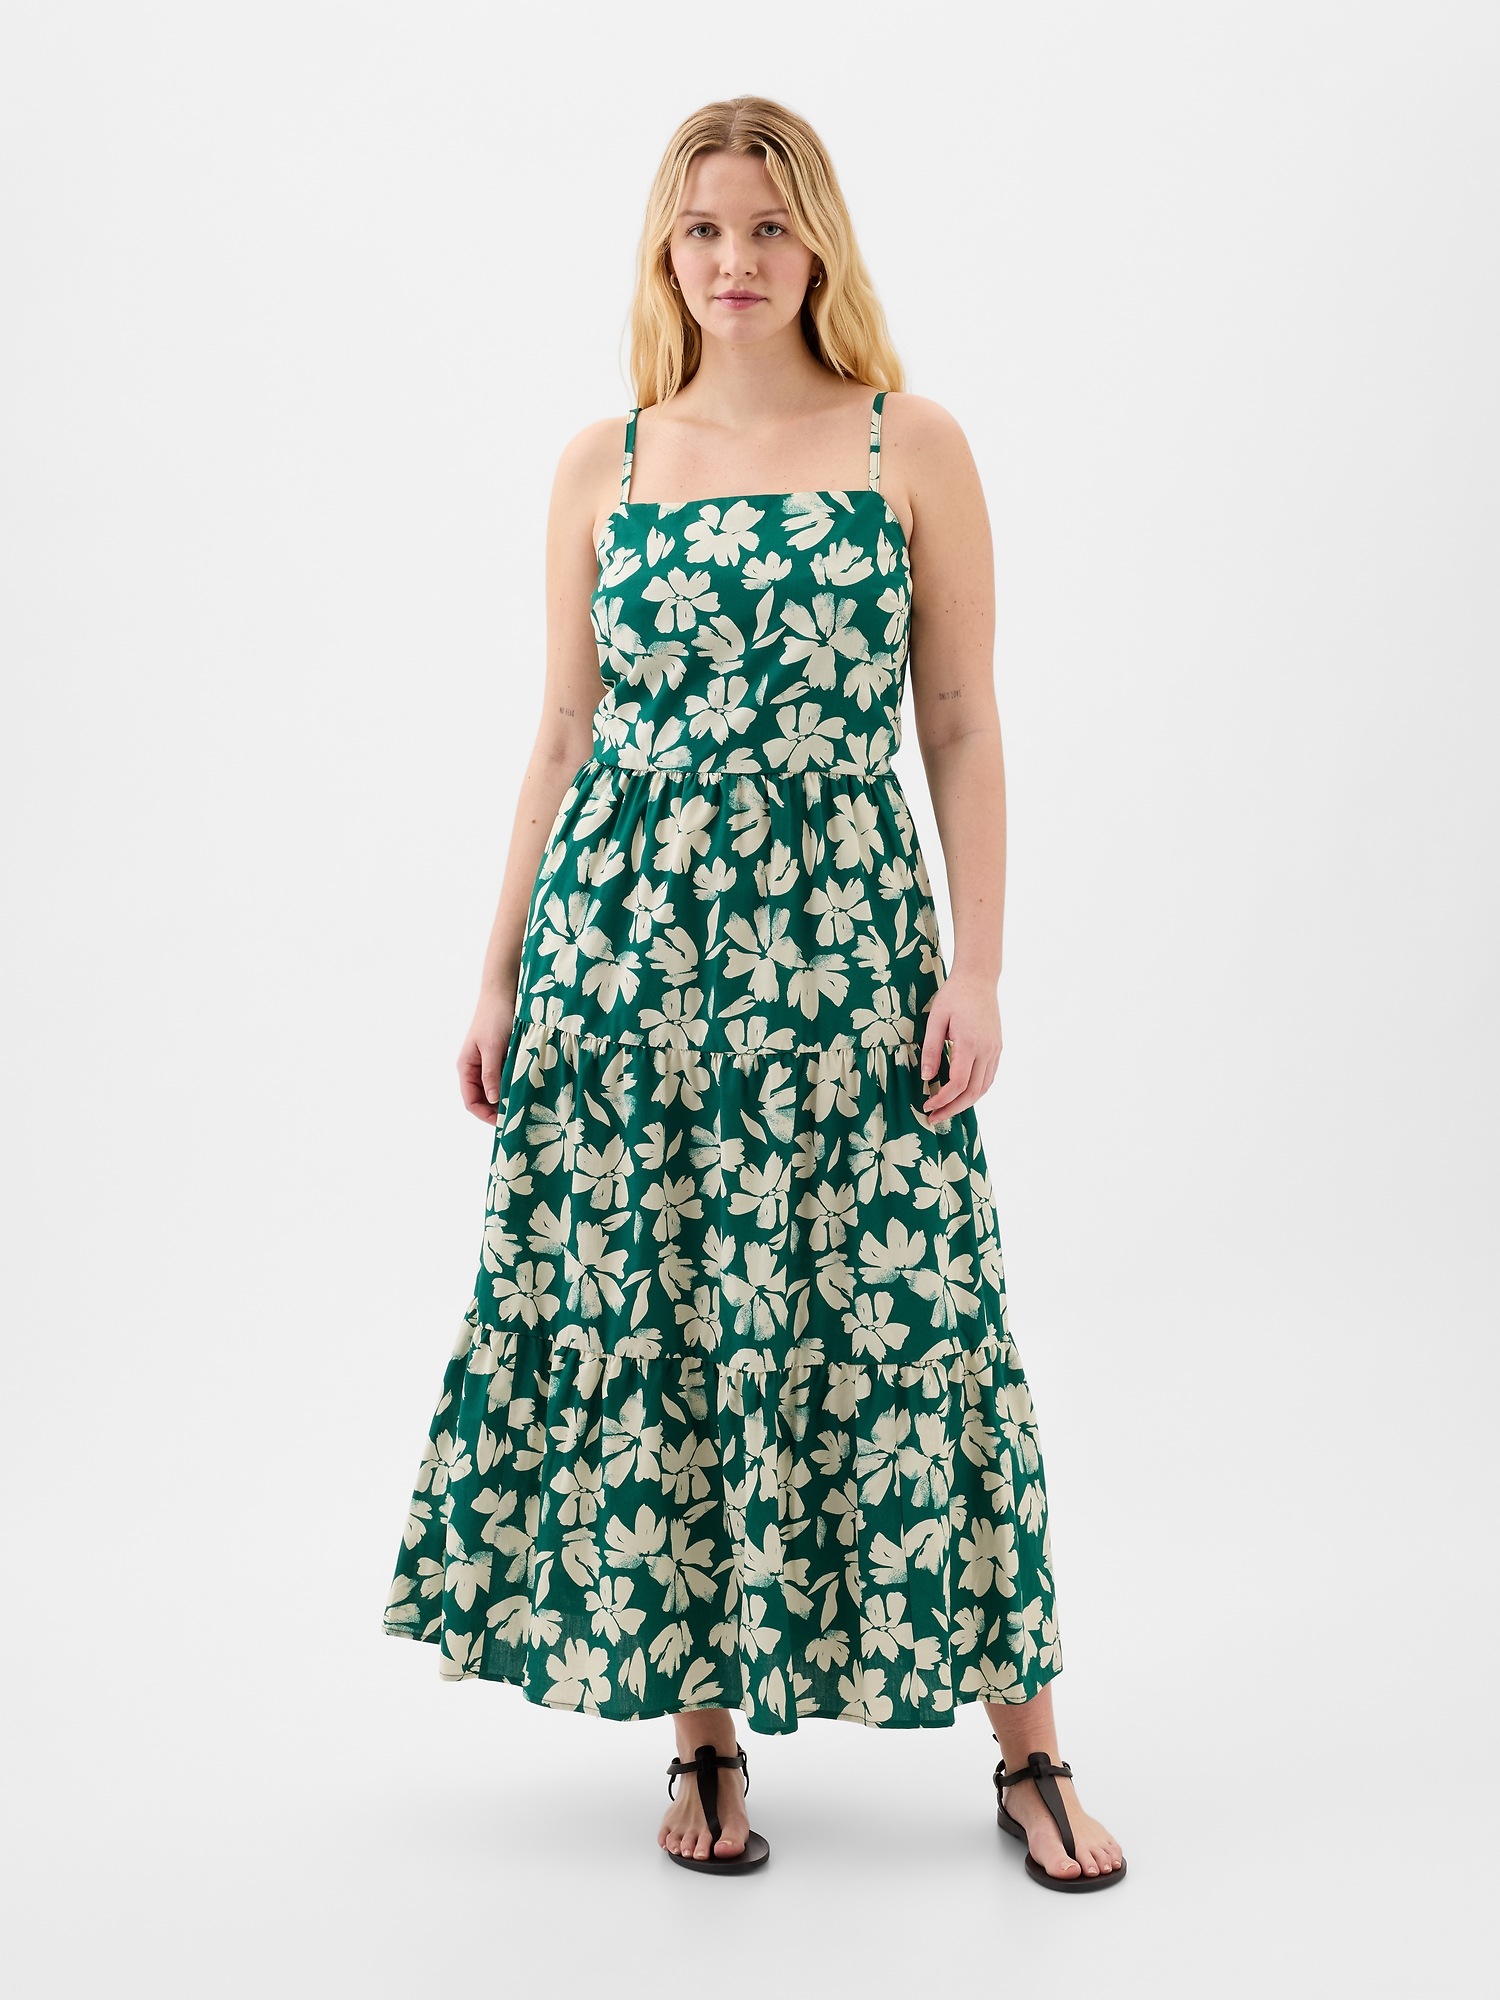 GAP Patterned Maxi Dress - Women's